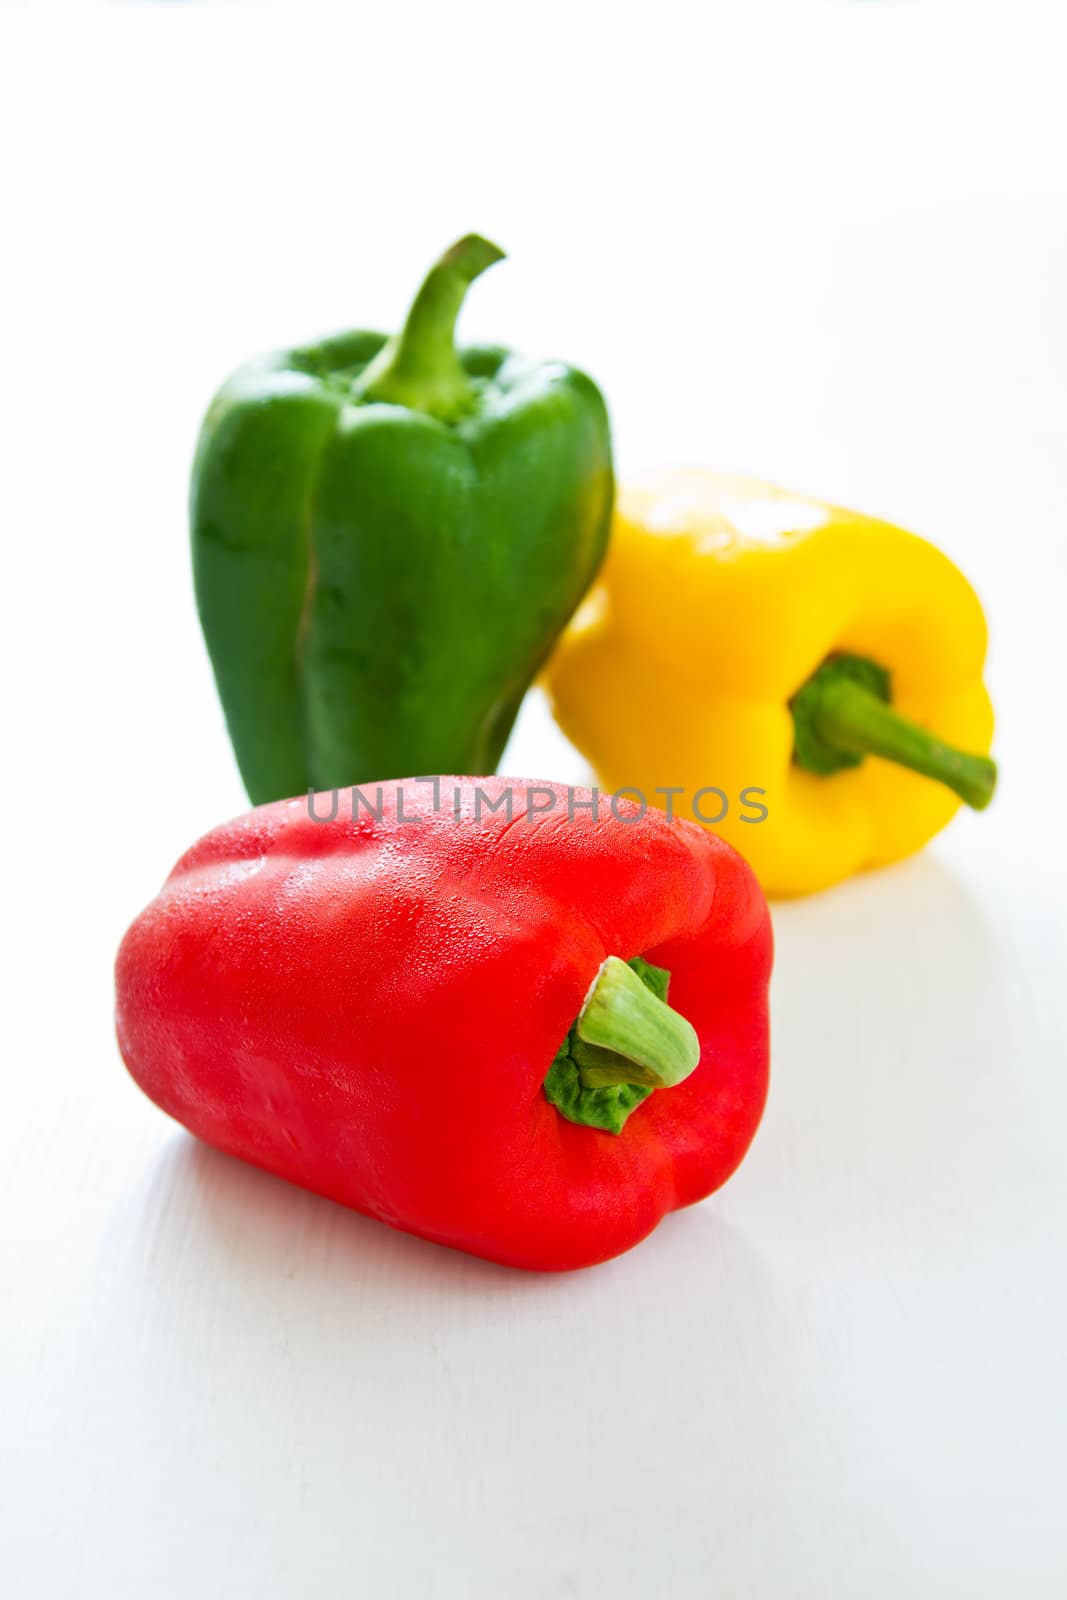 Fresh Bell pepper also known as Sweet pepper or Capisum